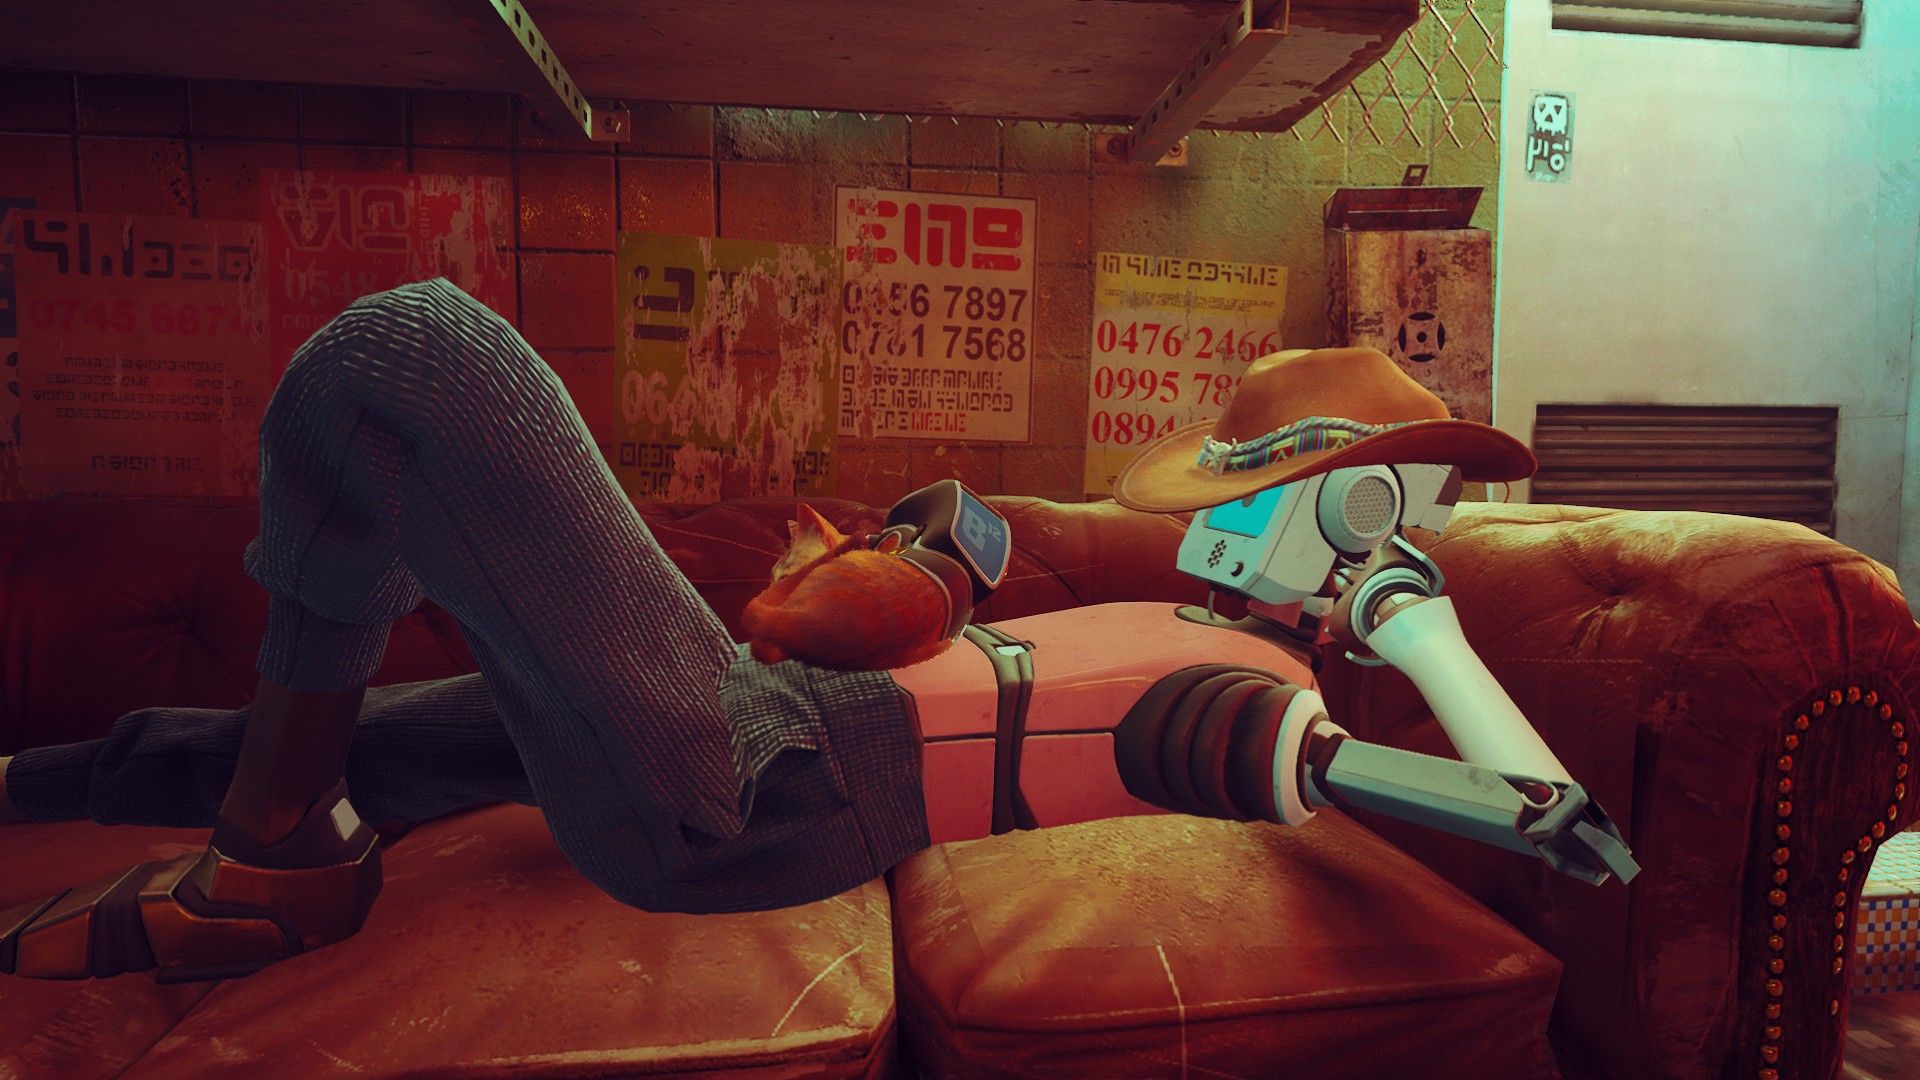 Stray sleeping on a robot